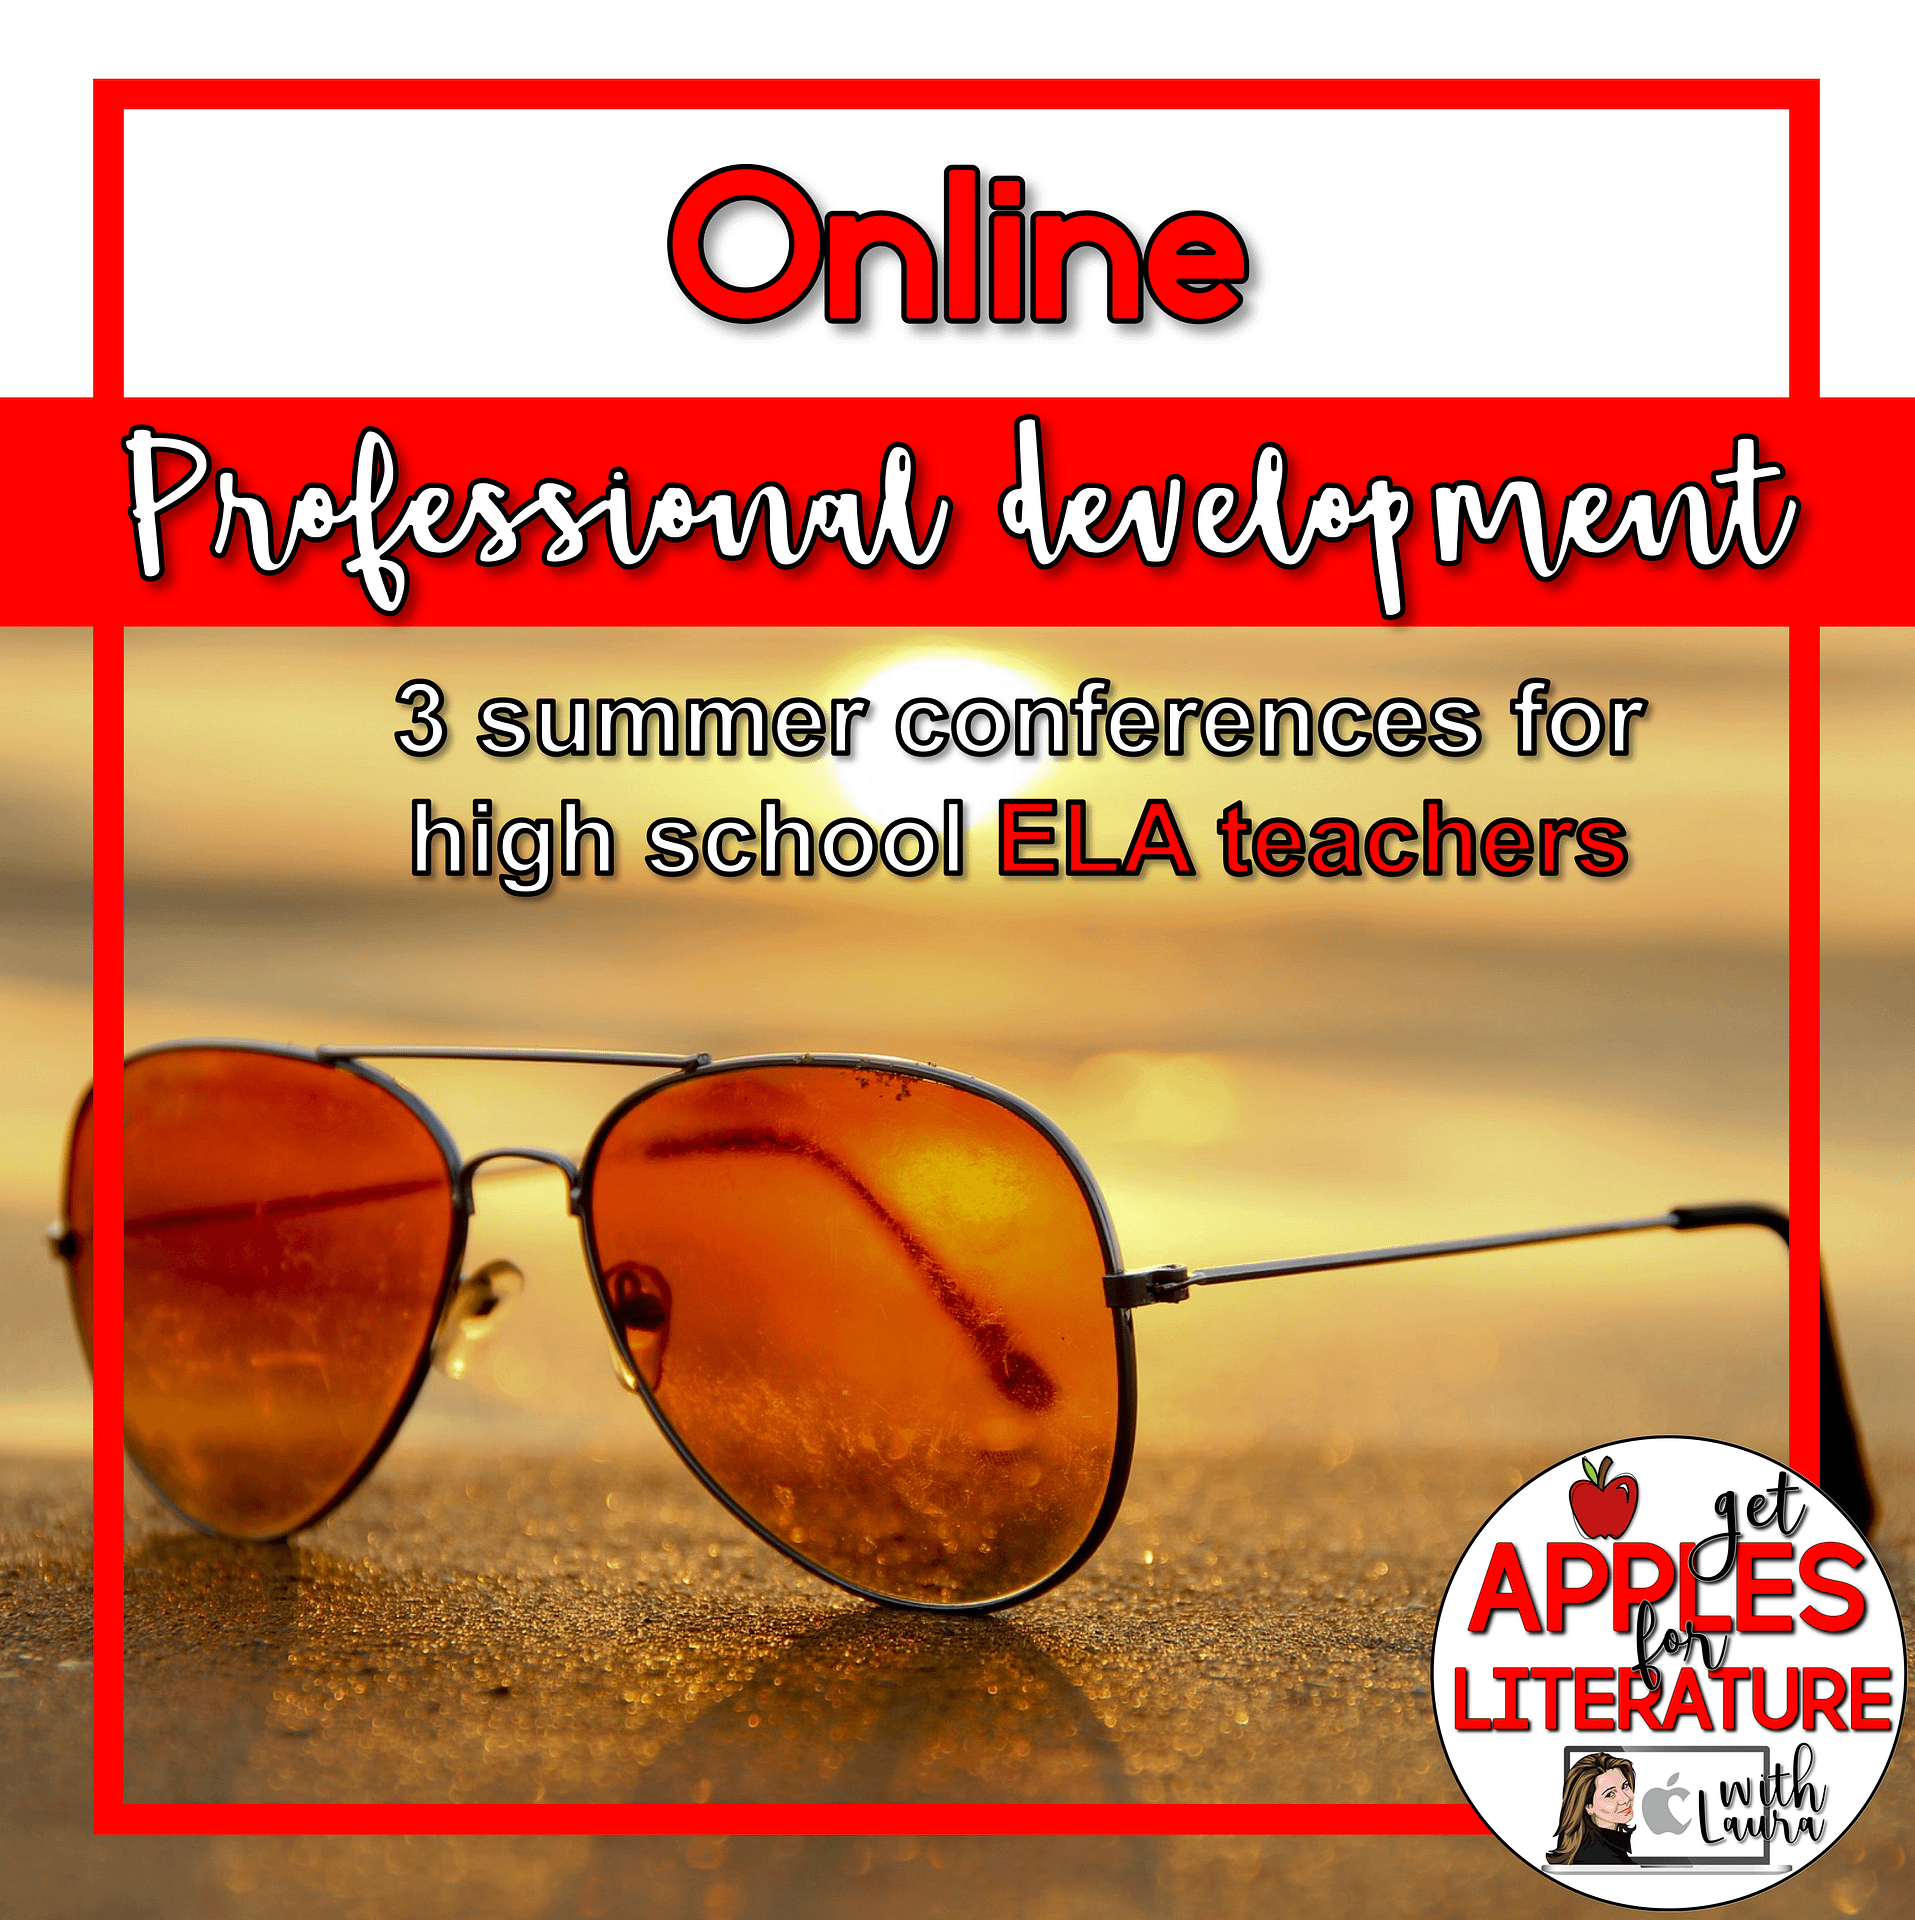 Online Professional Development: 3 Summer conferences for high school ELA teachers